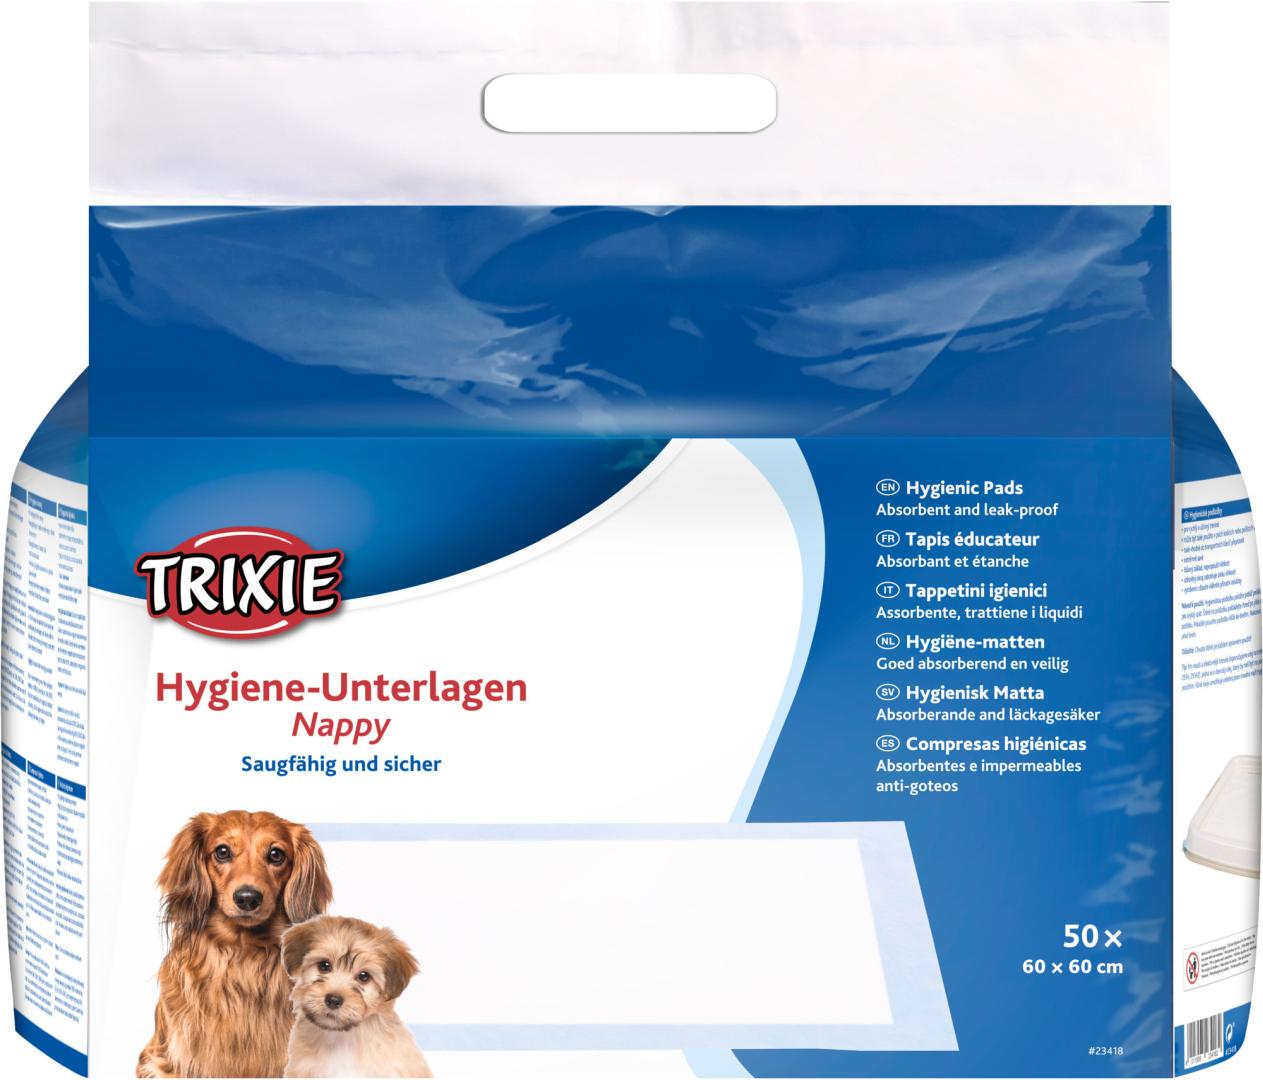 TRIXIE Hygiene-Unterlage Nappy, 60 x 60 cm, 50 Stück